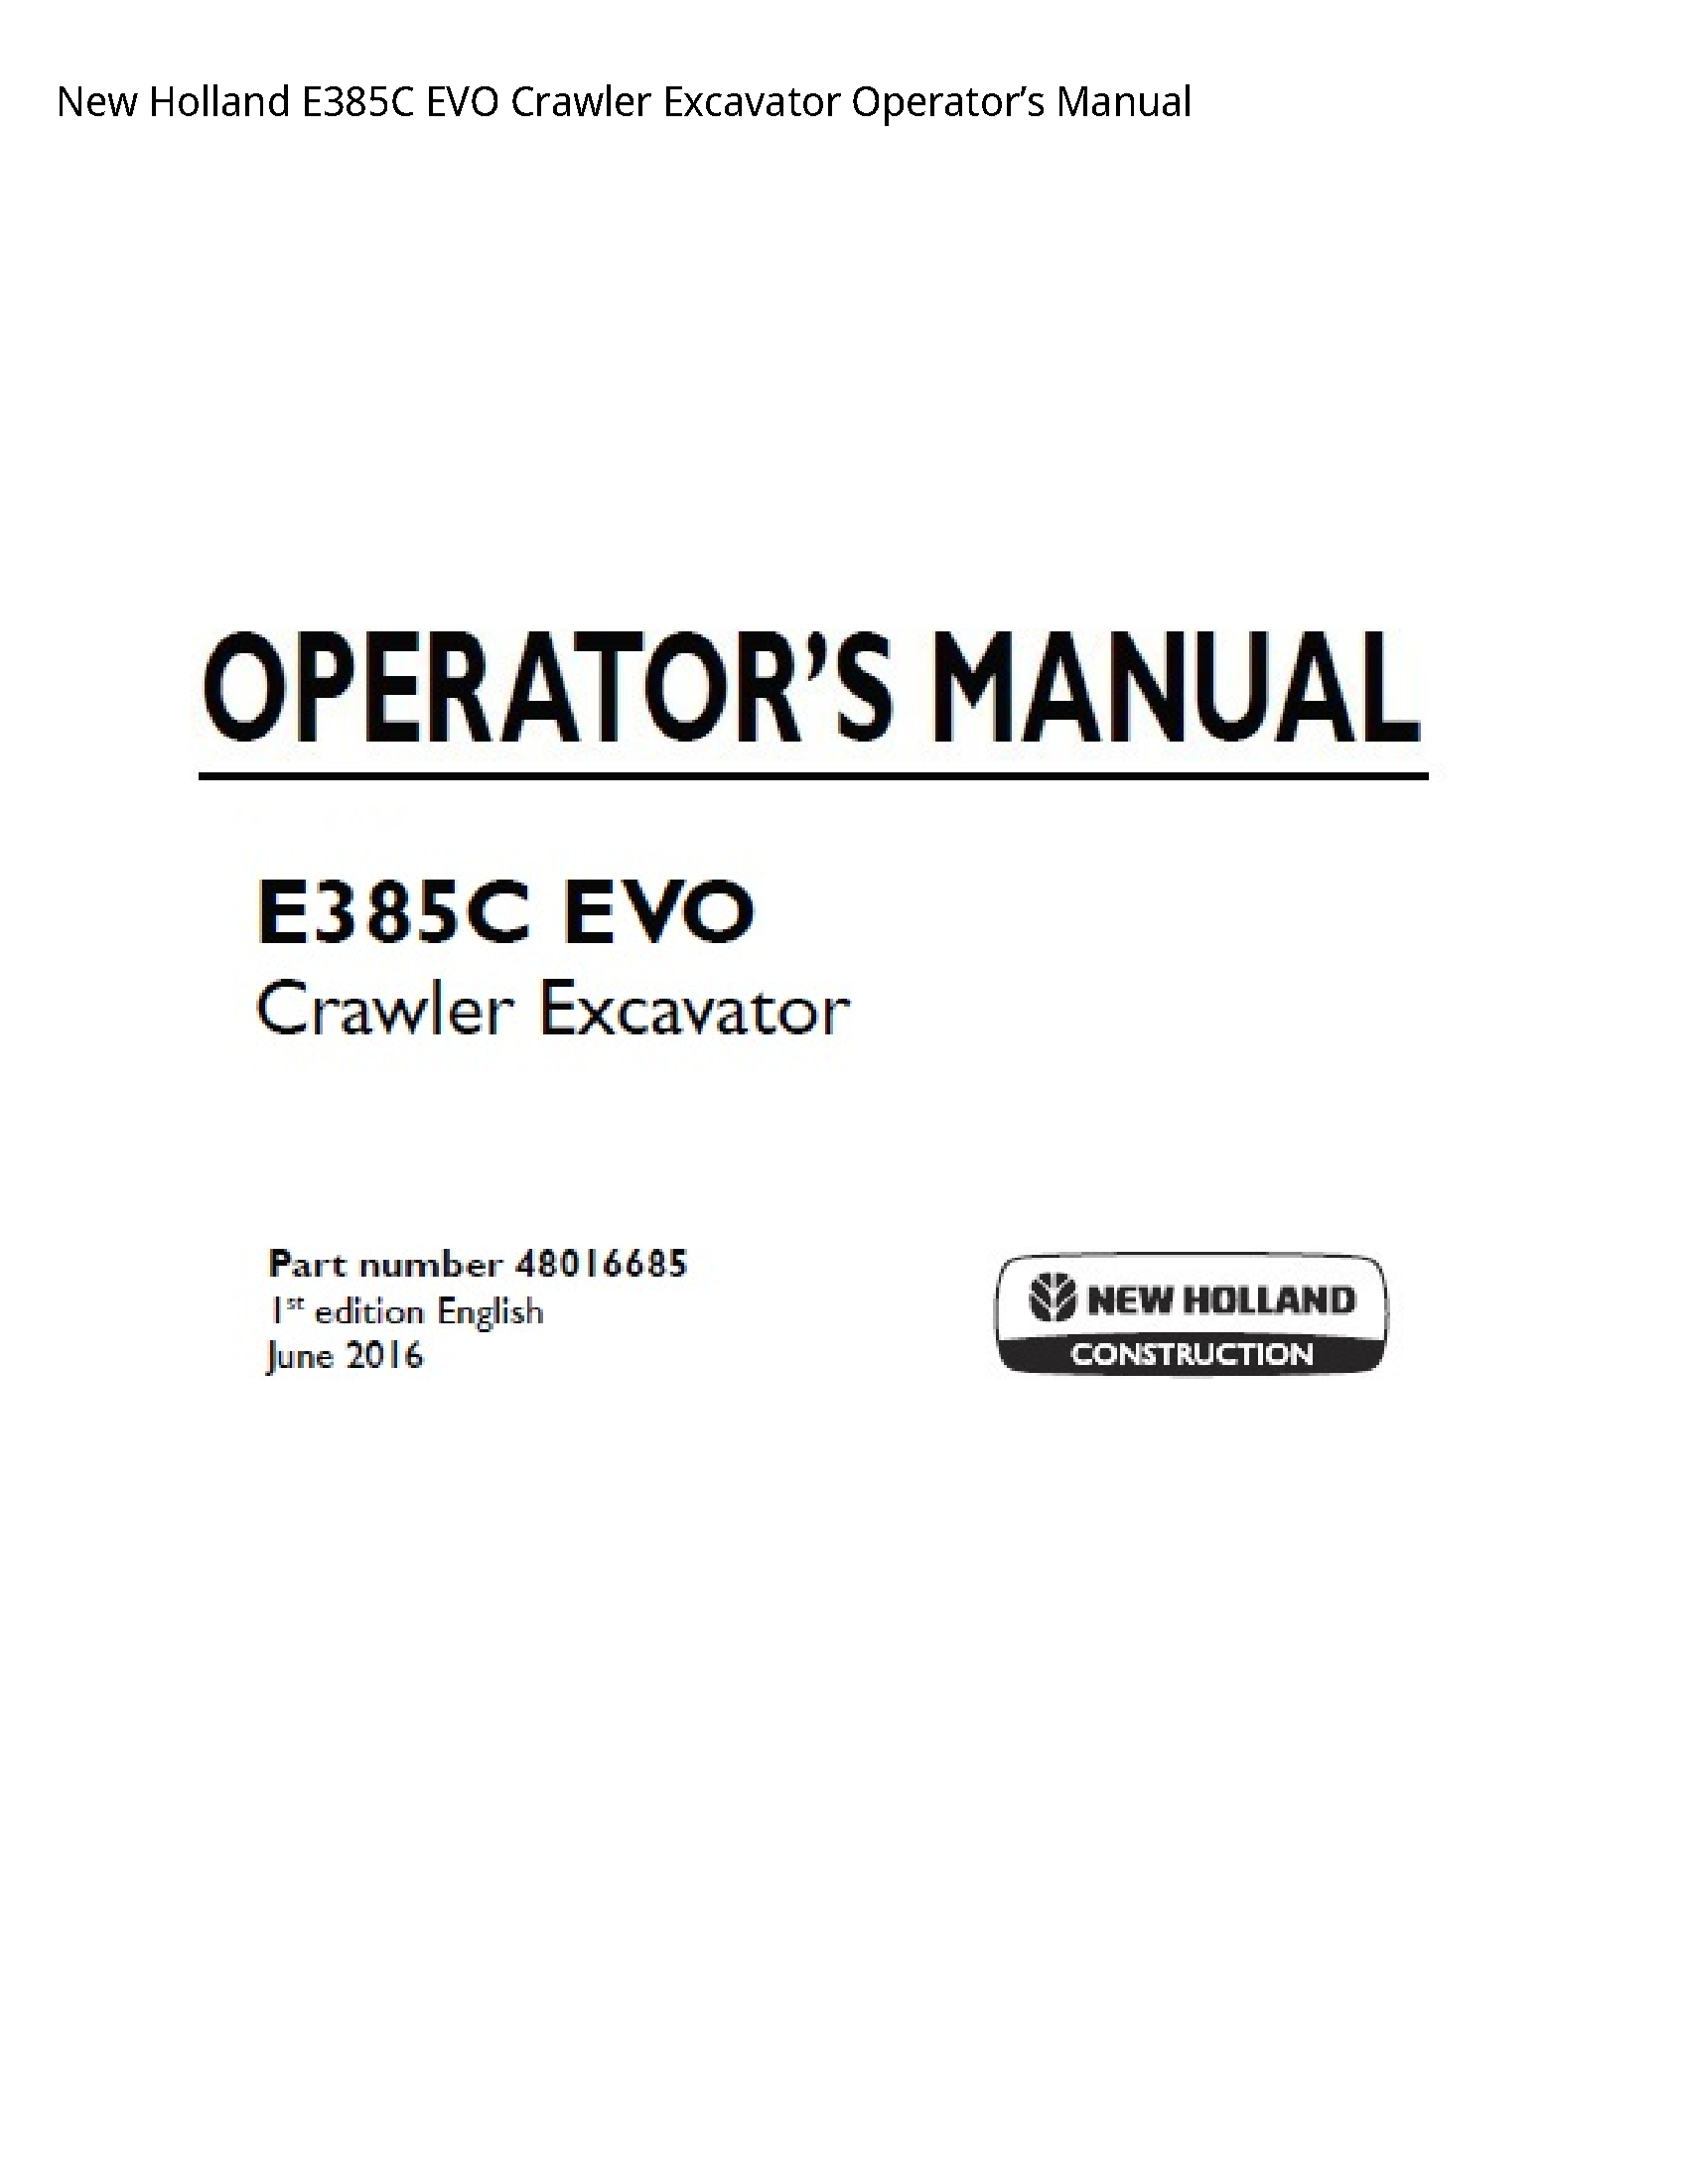 New Holland E385C EVO Crawler Excavator Operator’s manual